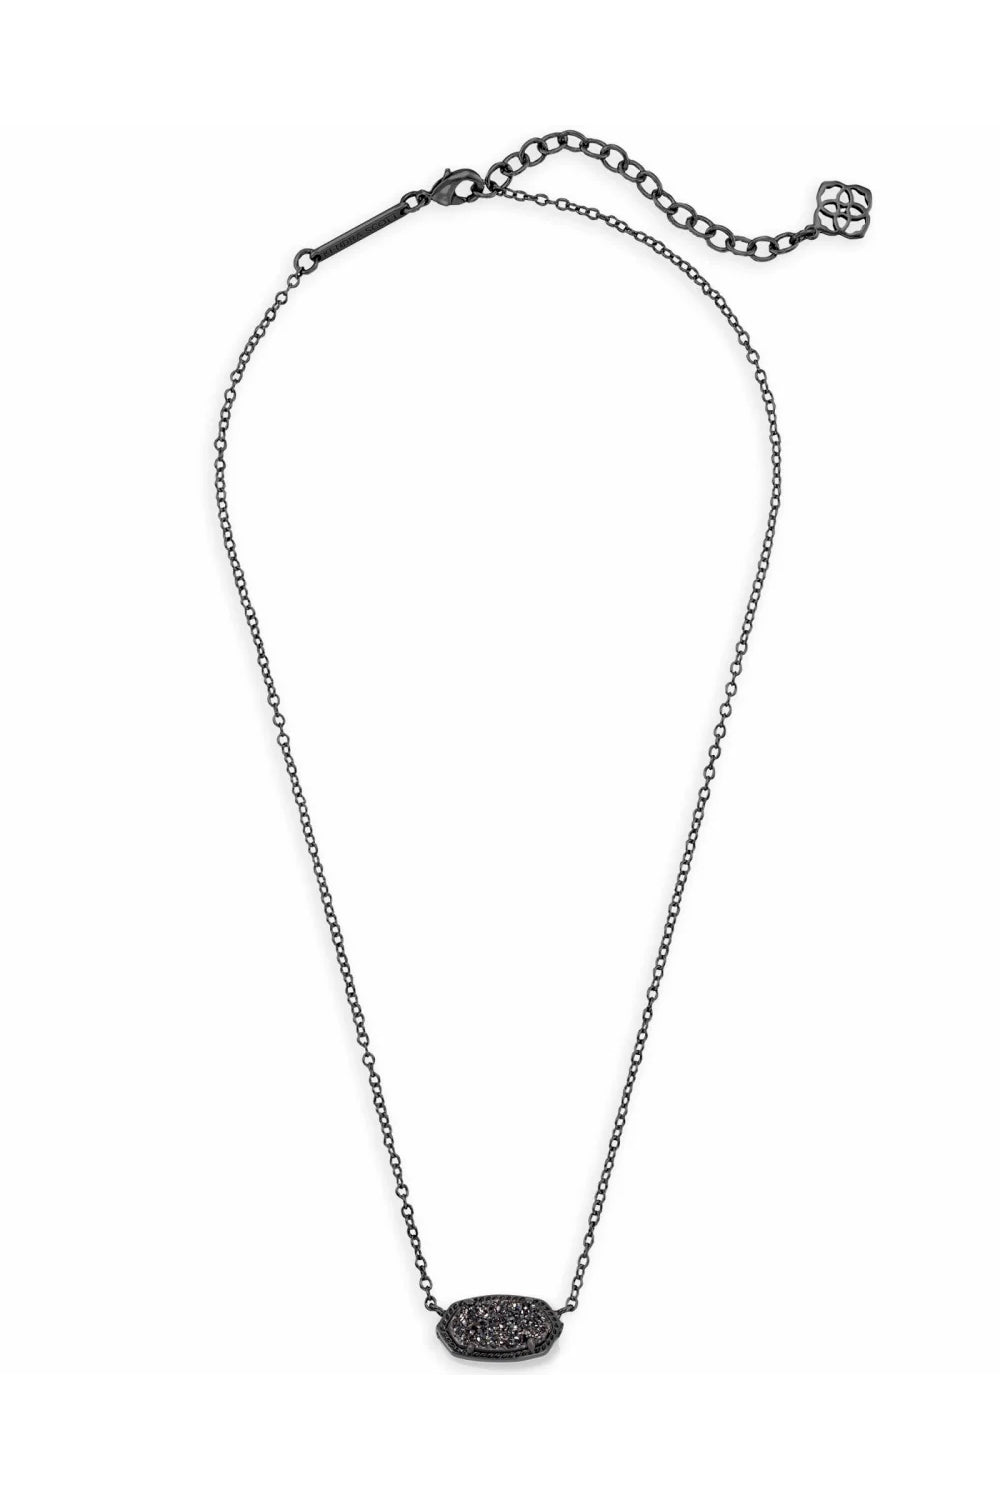 Kendra Scott: Elisa Gunmetal Pendant Necklace - Black Drusy | Makk Fashions